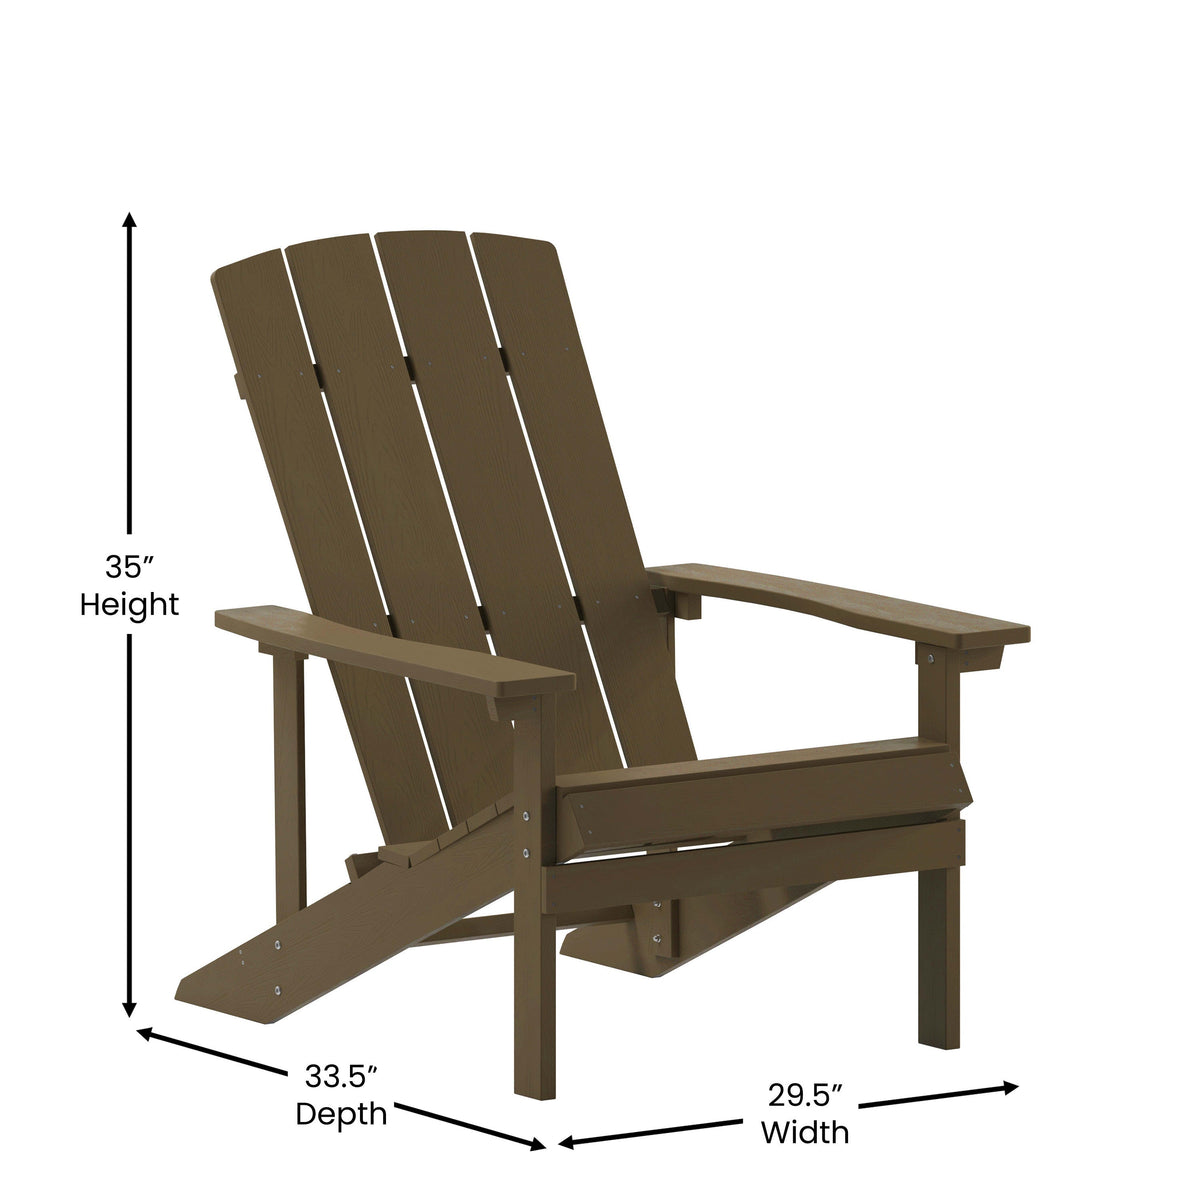 Mahogany |#| Outdoor Mahogany All-Weather Poly Resin Wood Adirondack Chair